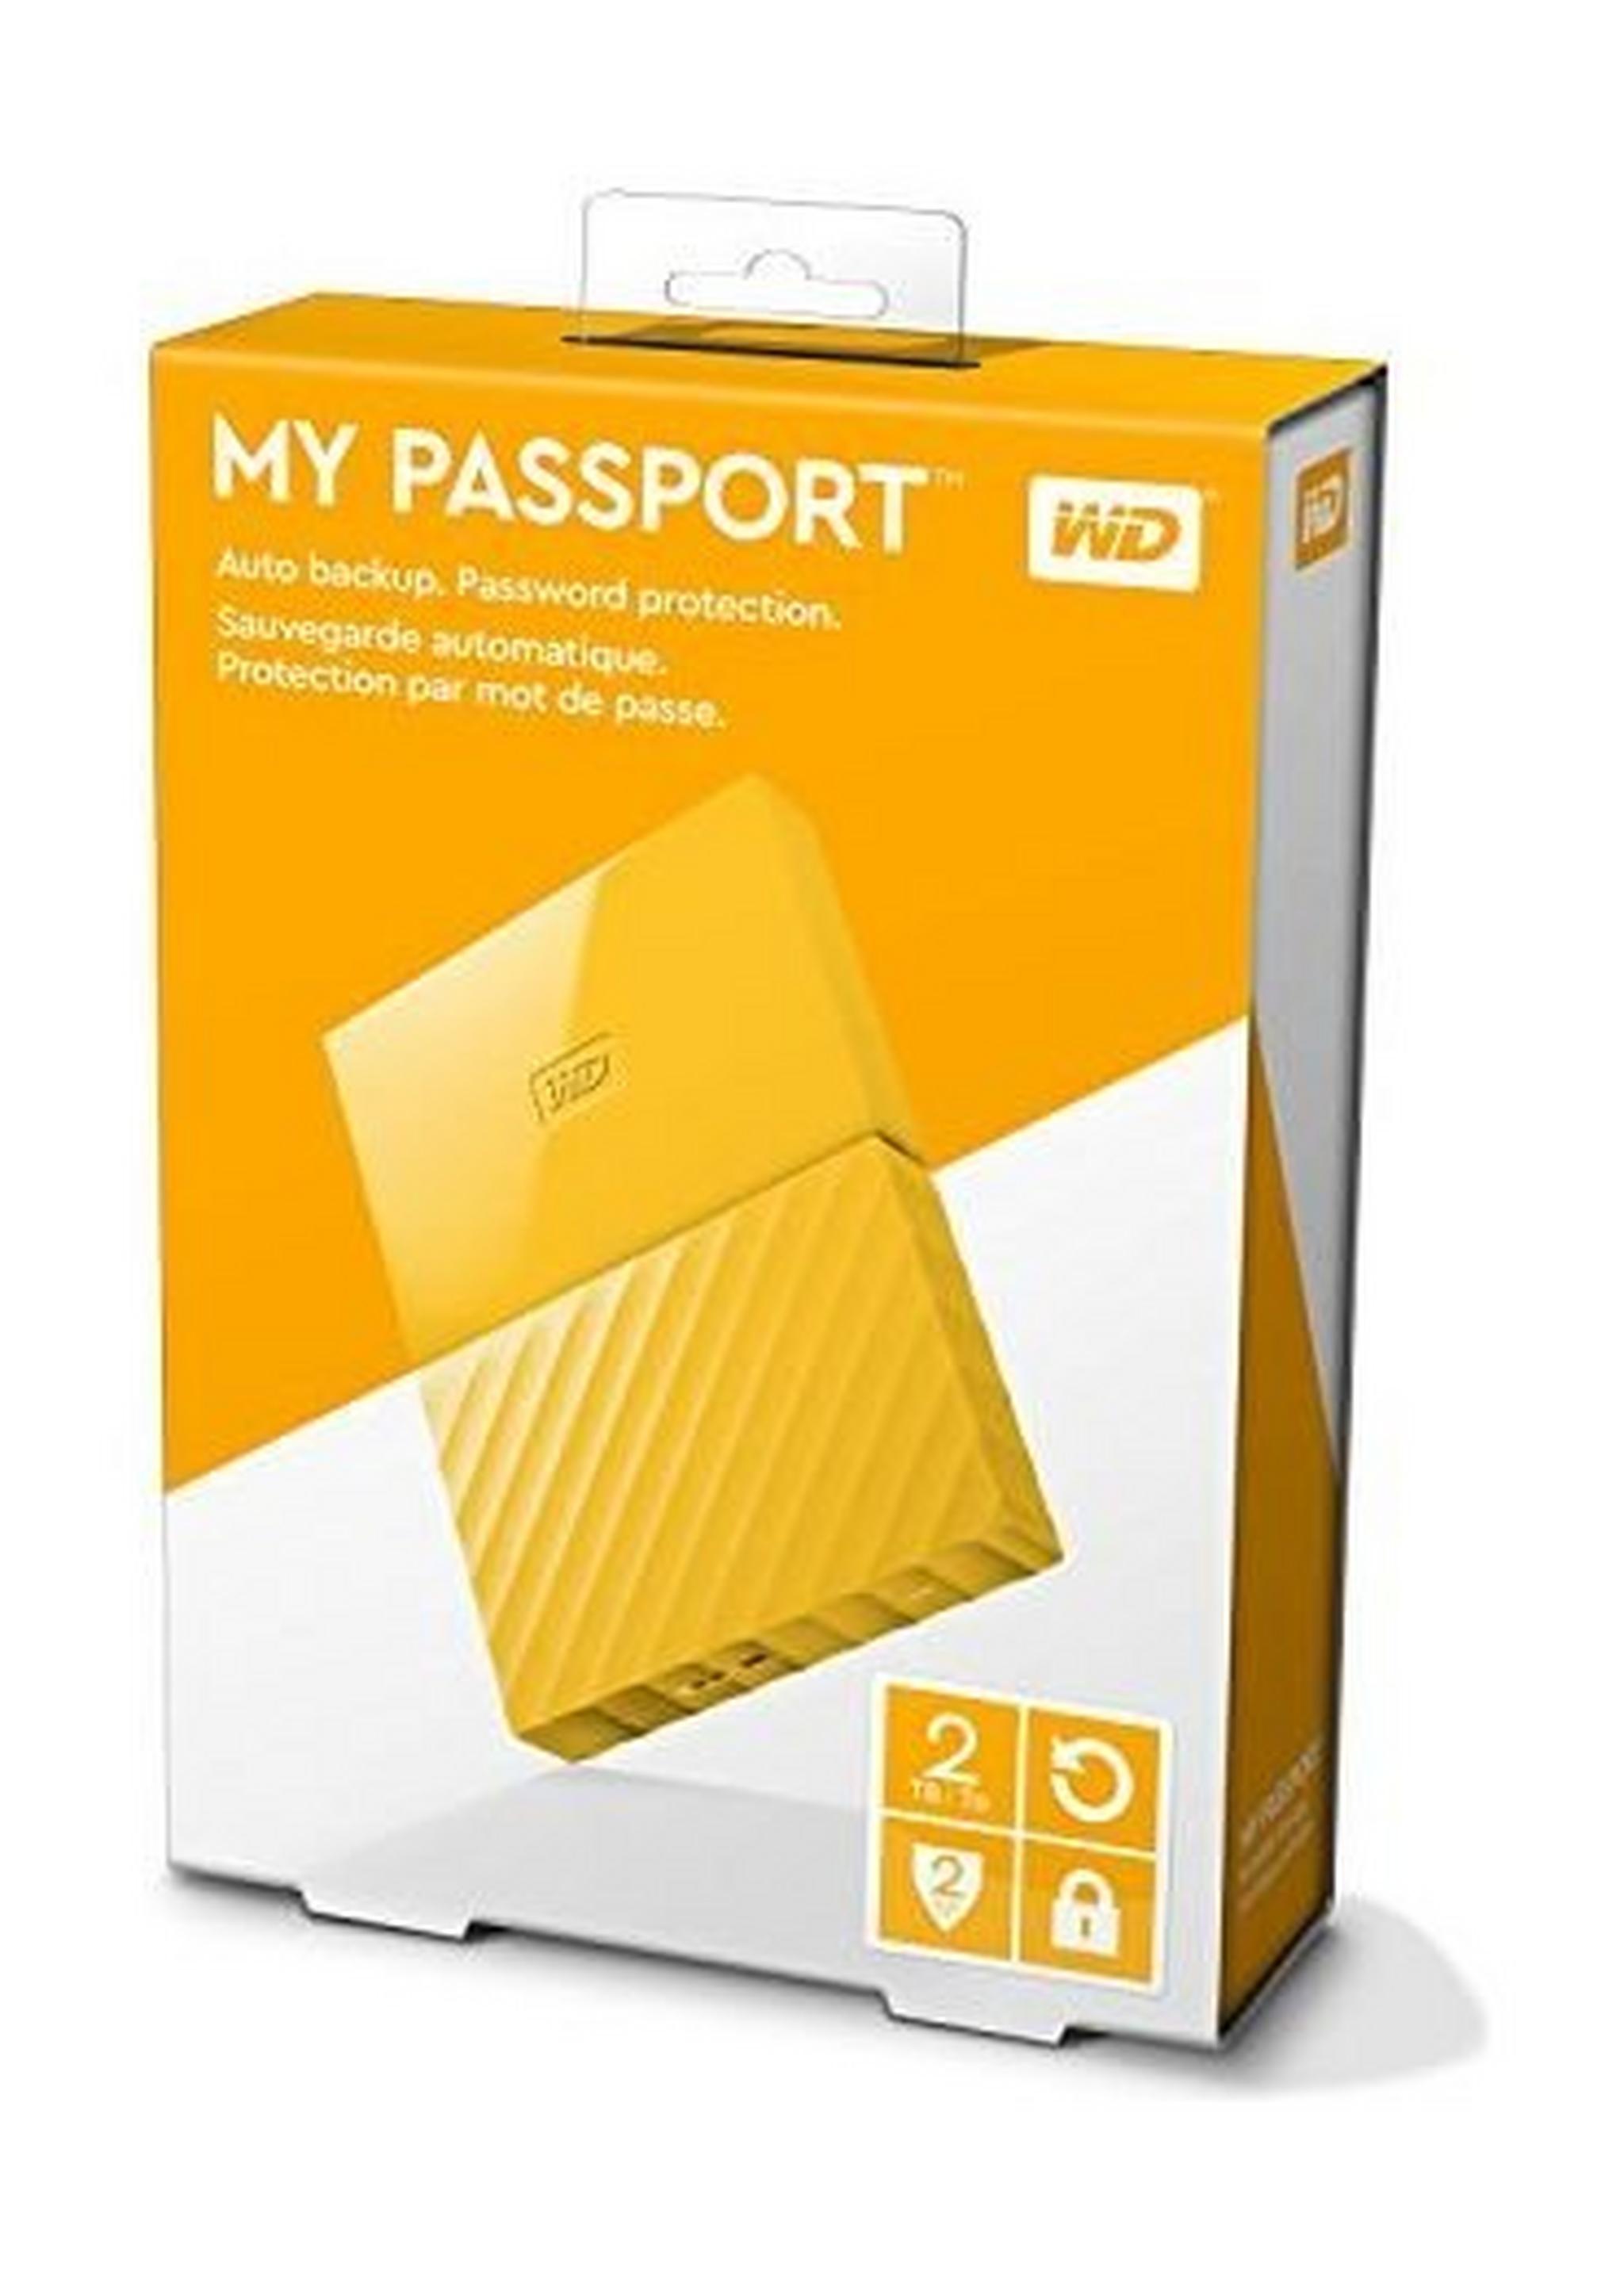 WD 2TB My Passport USB 3.0 External Hard Drive - Yellow